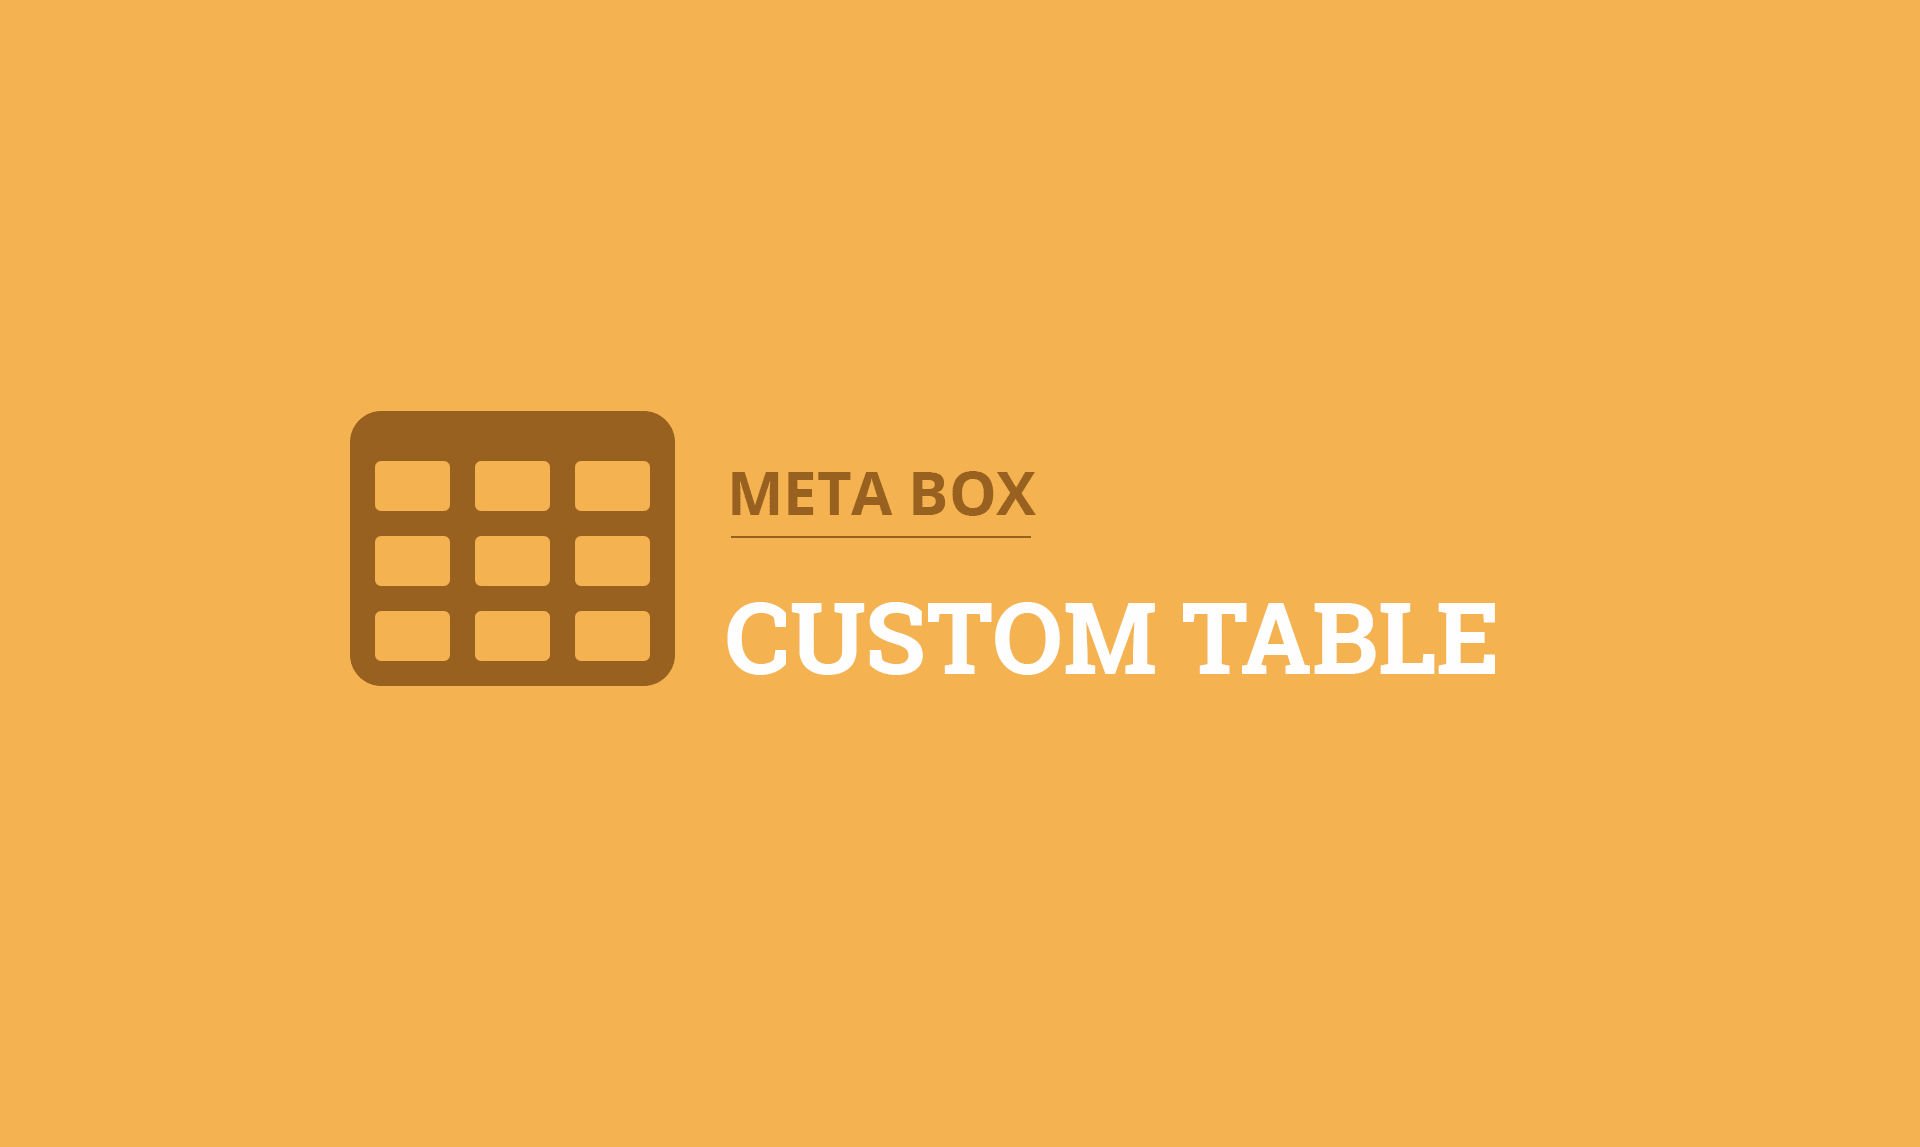 Meta Box Custom Table.jpg